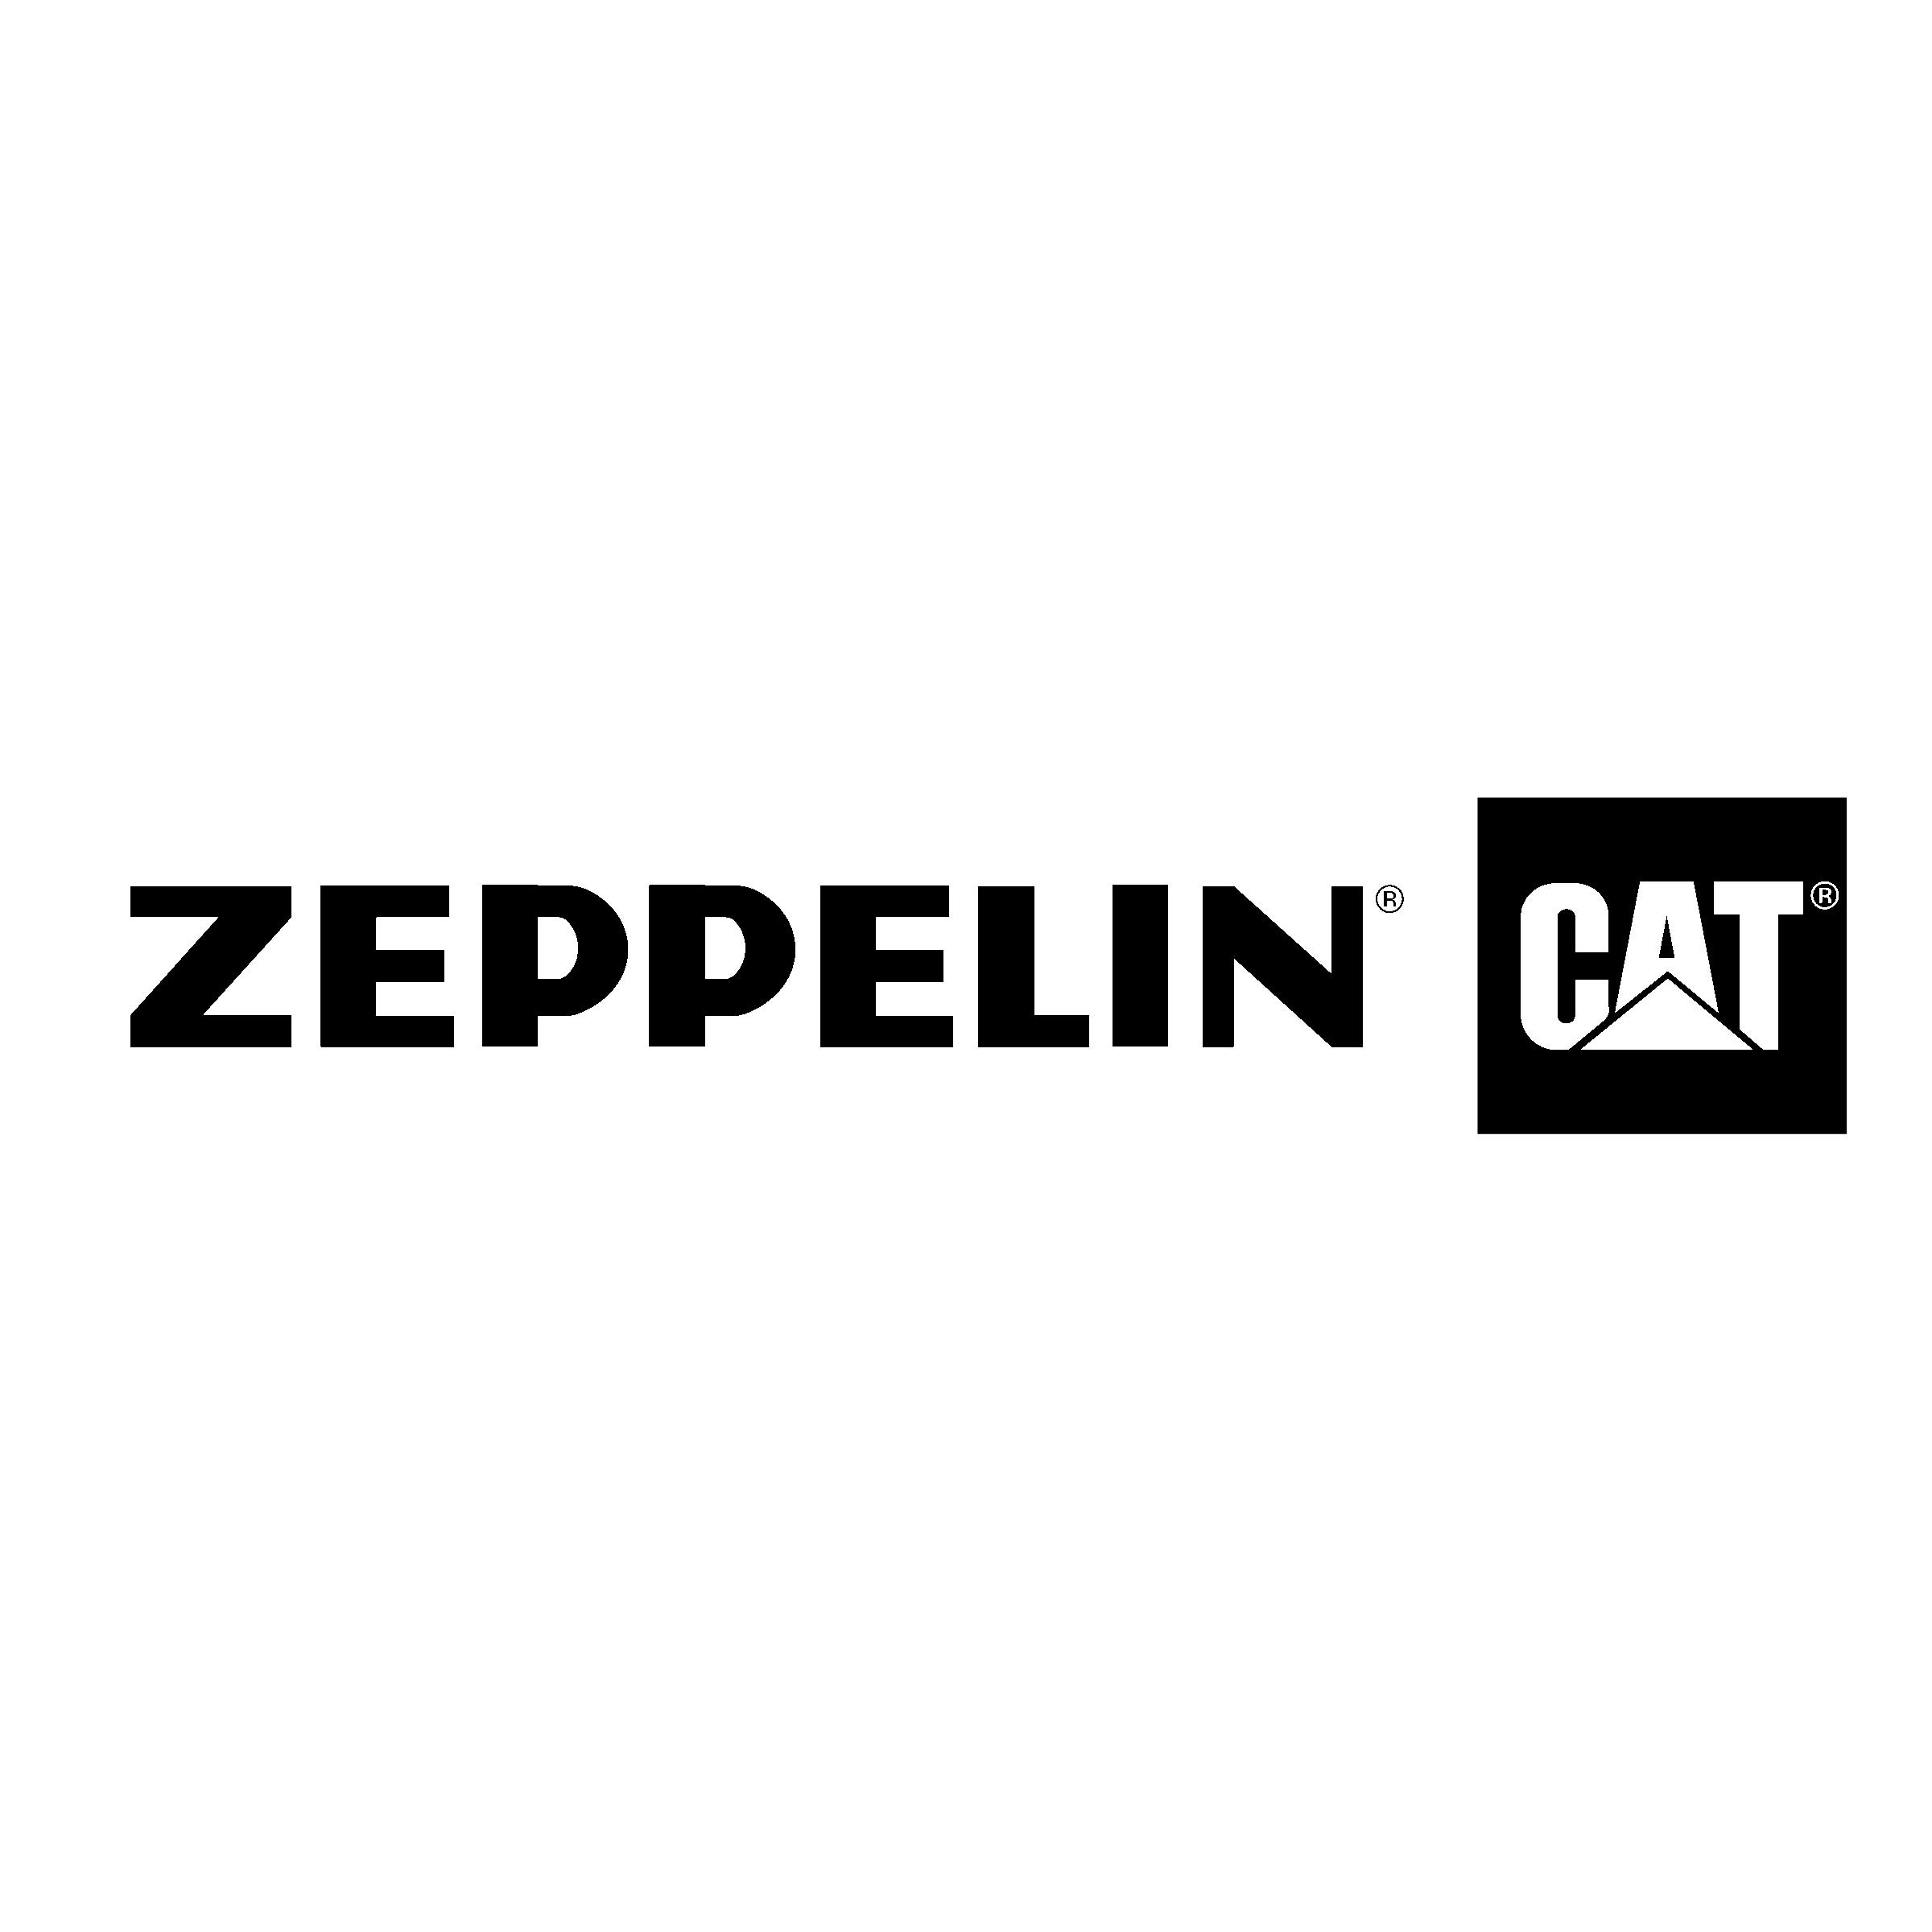 Black Caterpillar Logo - Zeppelin Caterpillar Logo PNG Transparent & SVG Vector - Freebie Supply